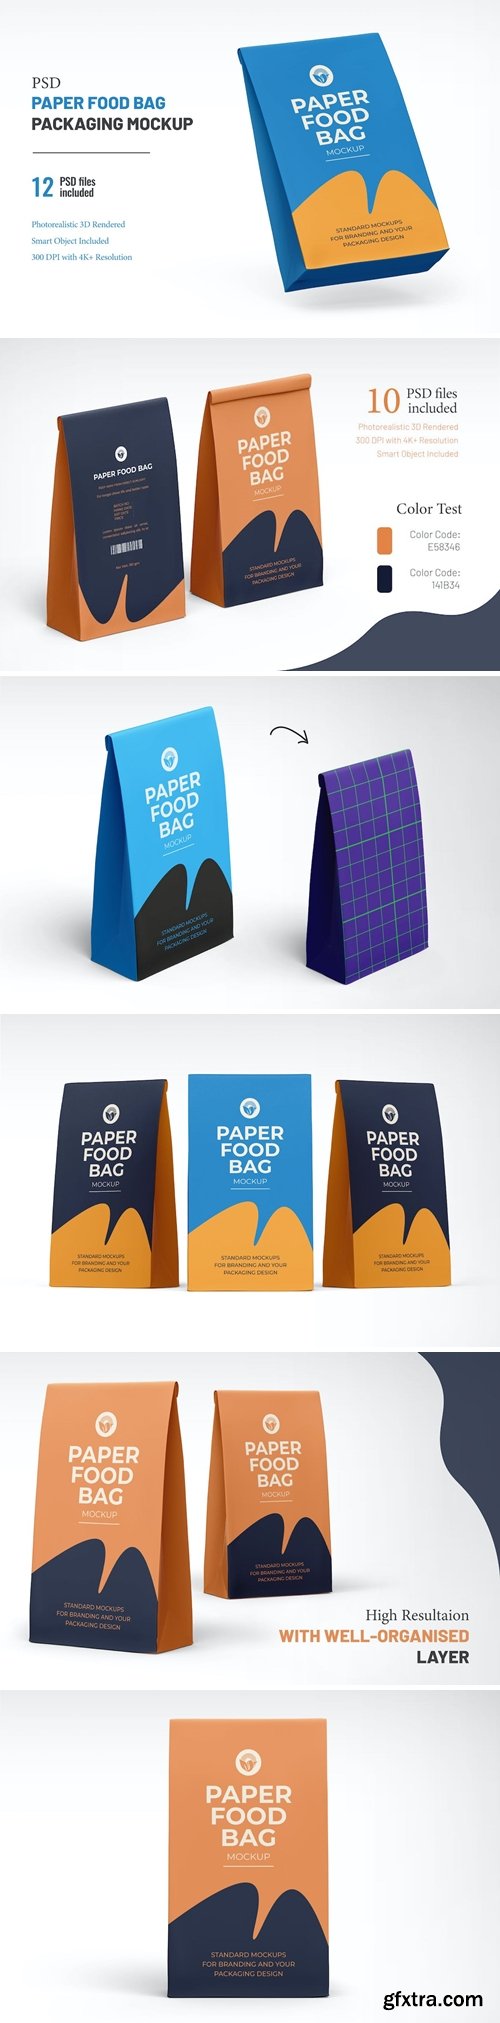 Paper Bag Packaging Mockup 8ZRLLGQ